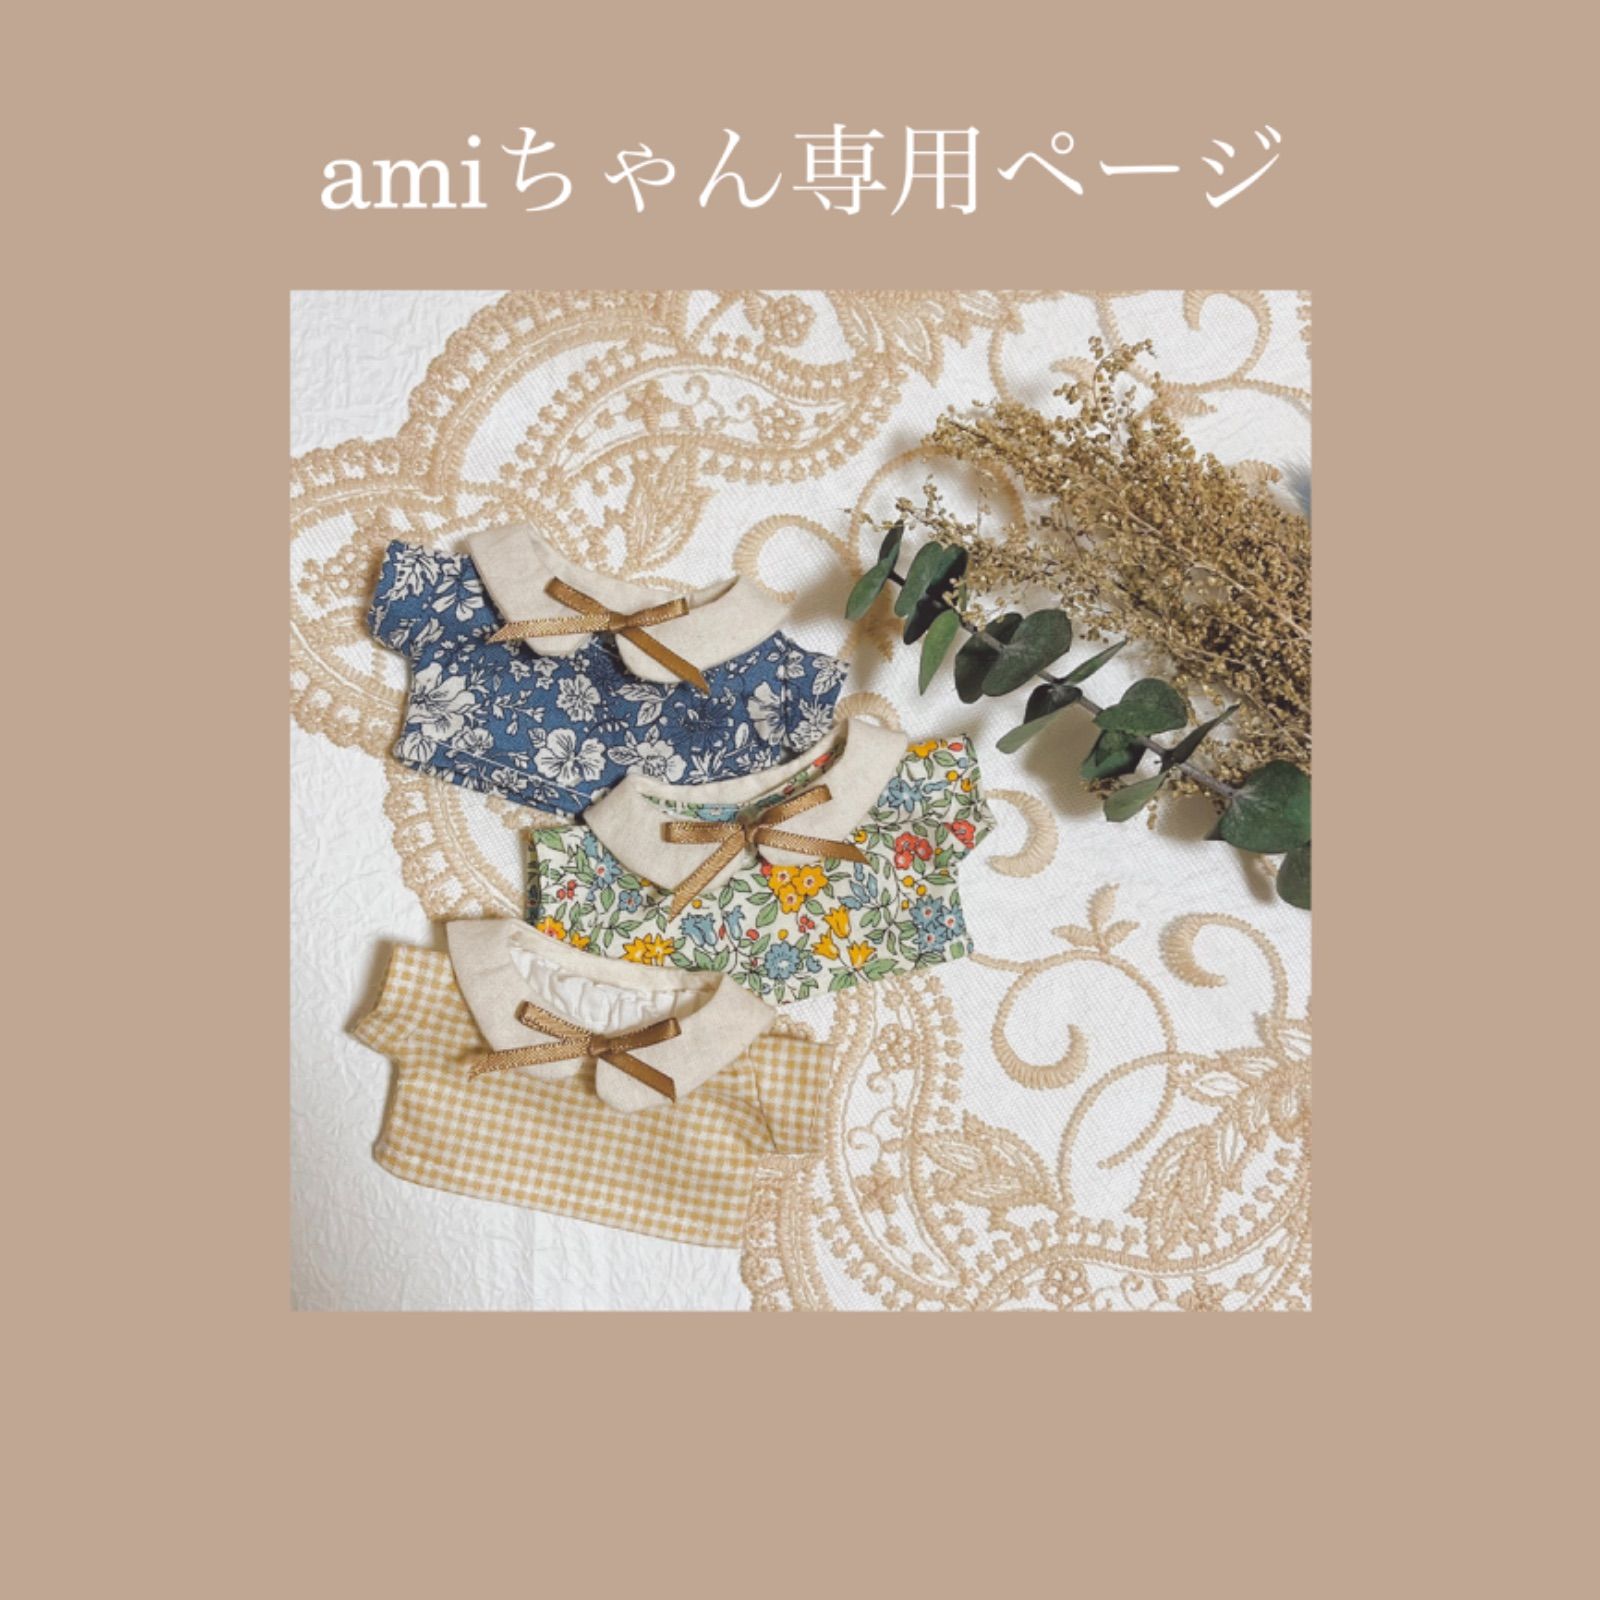 amiiちゃん専用 - 各種パーツ